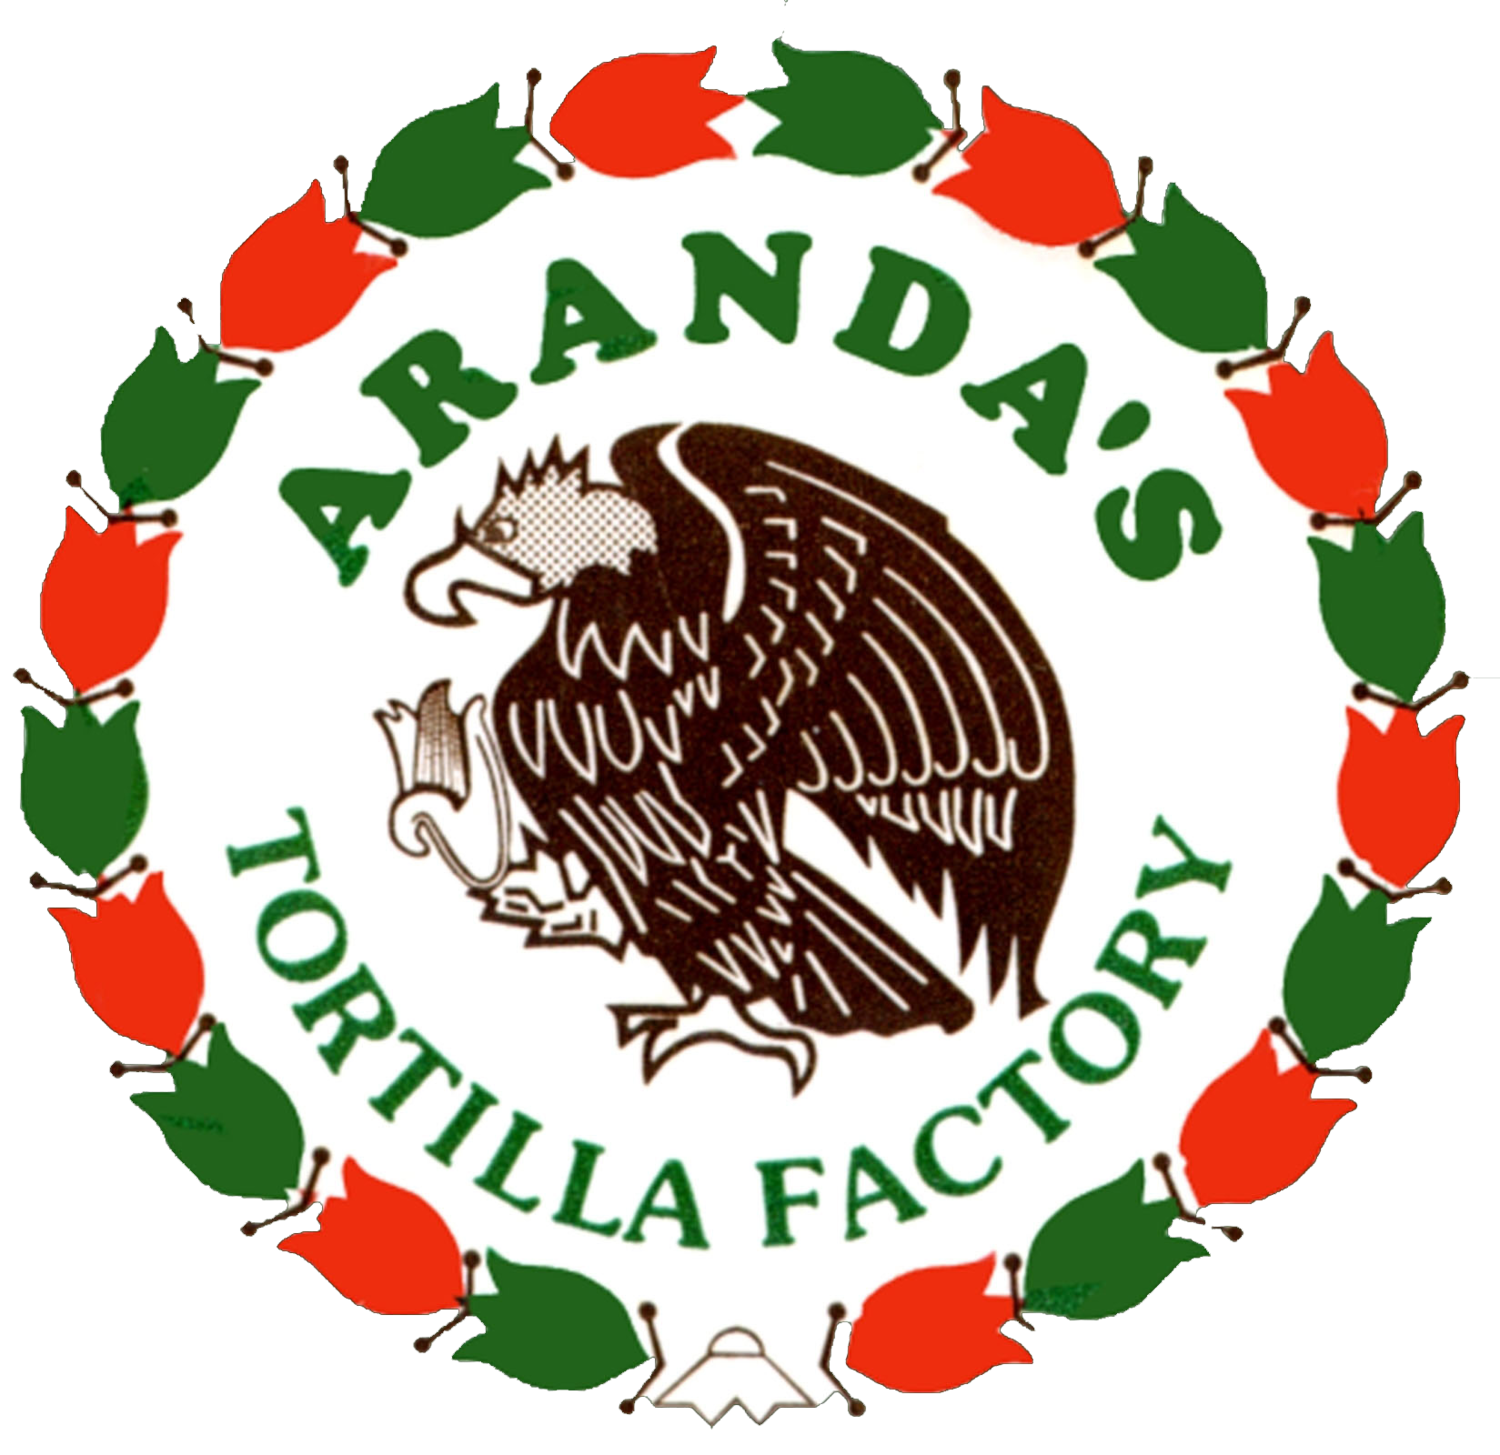 Aranda's Tortilla Factory